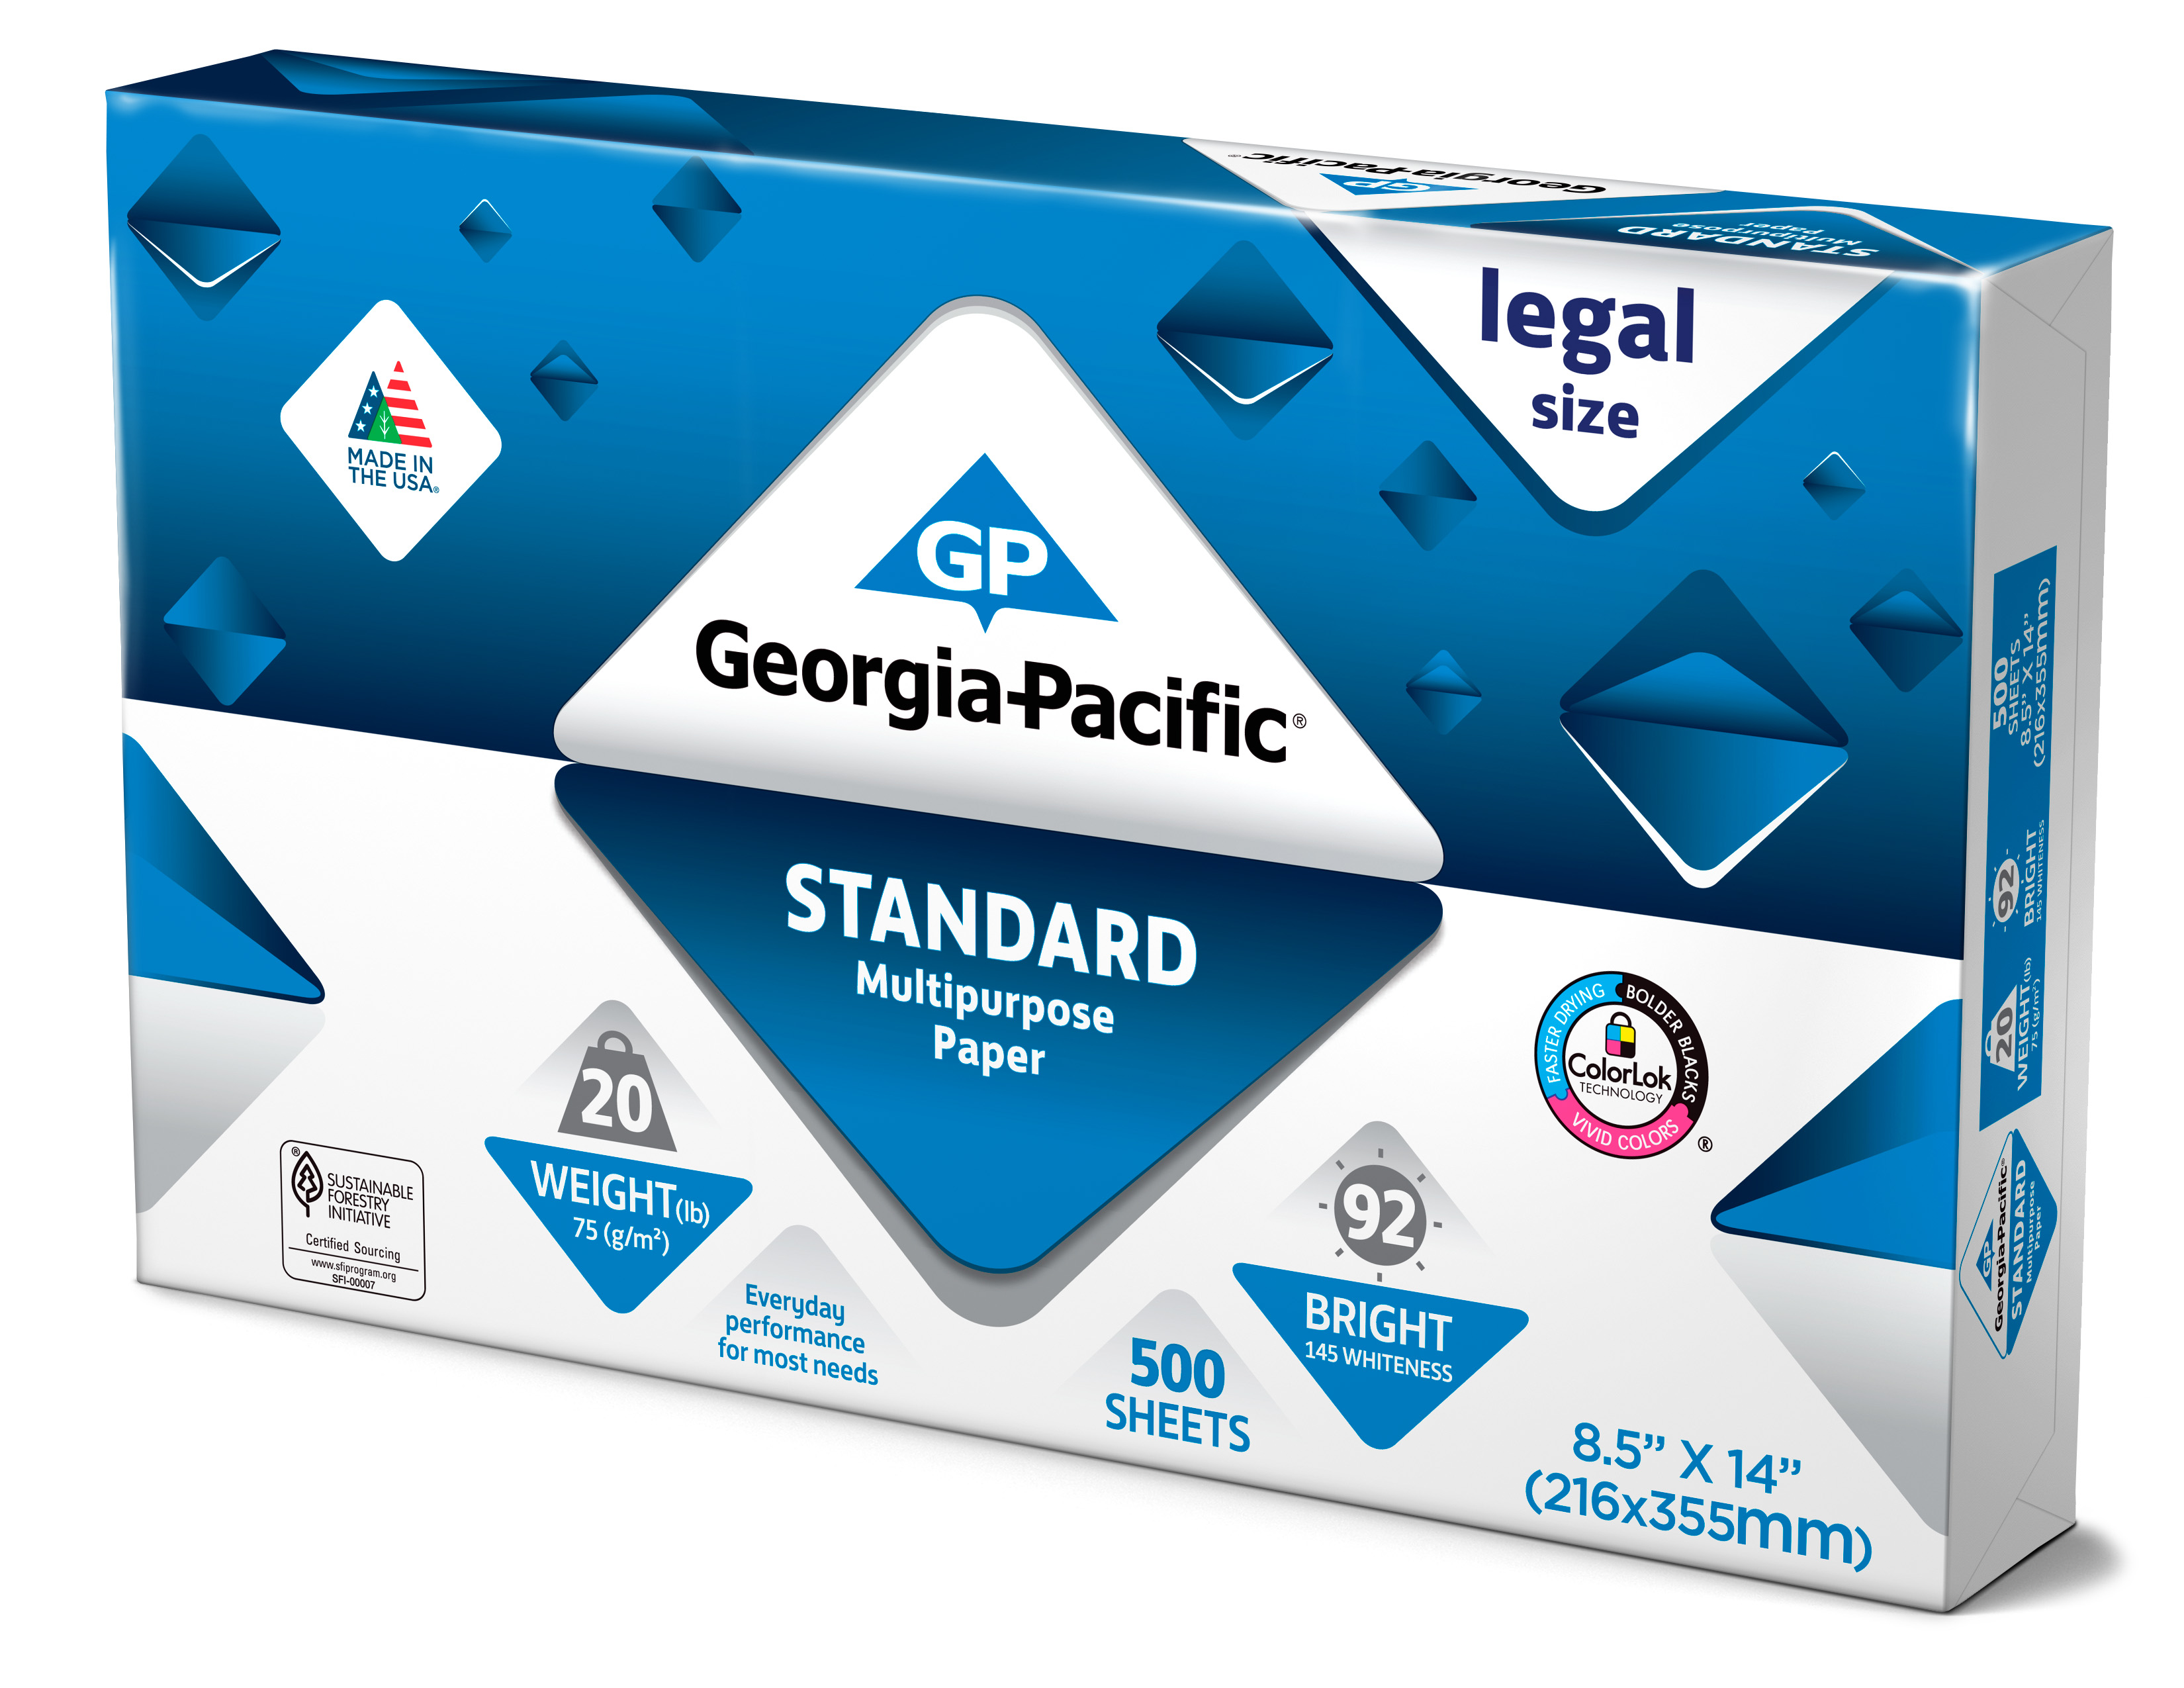 Georgia-Pacific Std. Legal Paper 8.5" x 14", 20lb/92 Bright, 500 Sheets - image 1 of 2